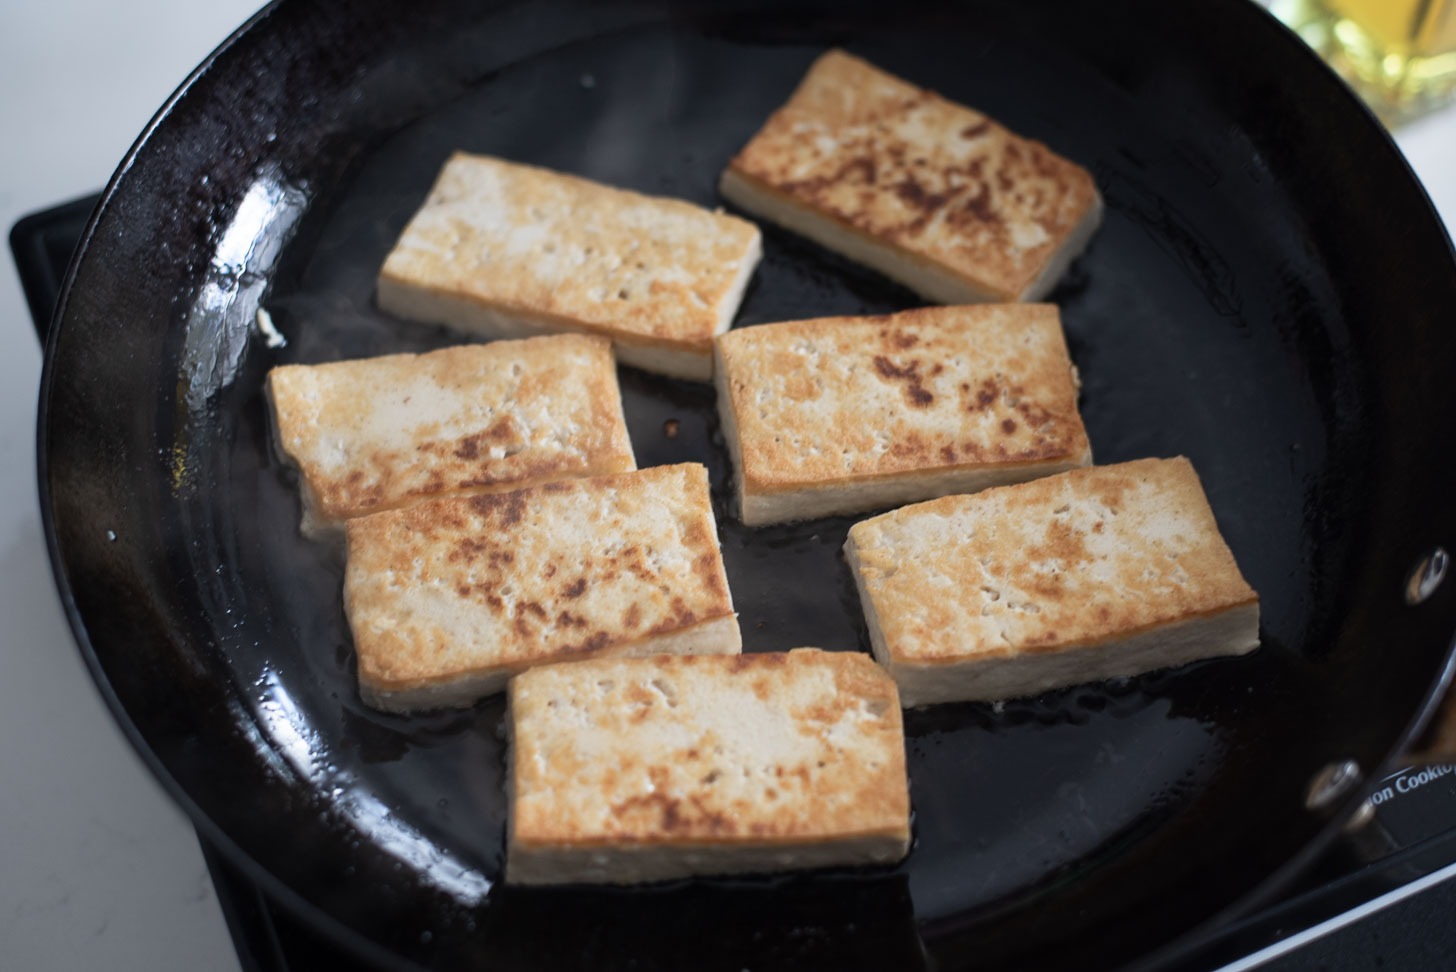 Pan-seard tofu slices in a skillet to make dubu jorim (braised tofu)